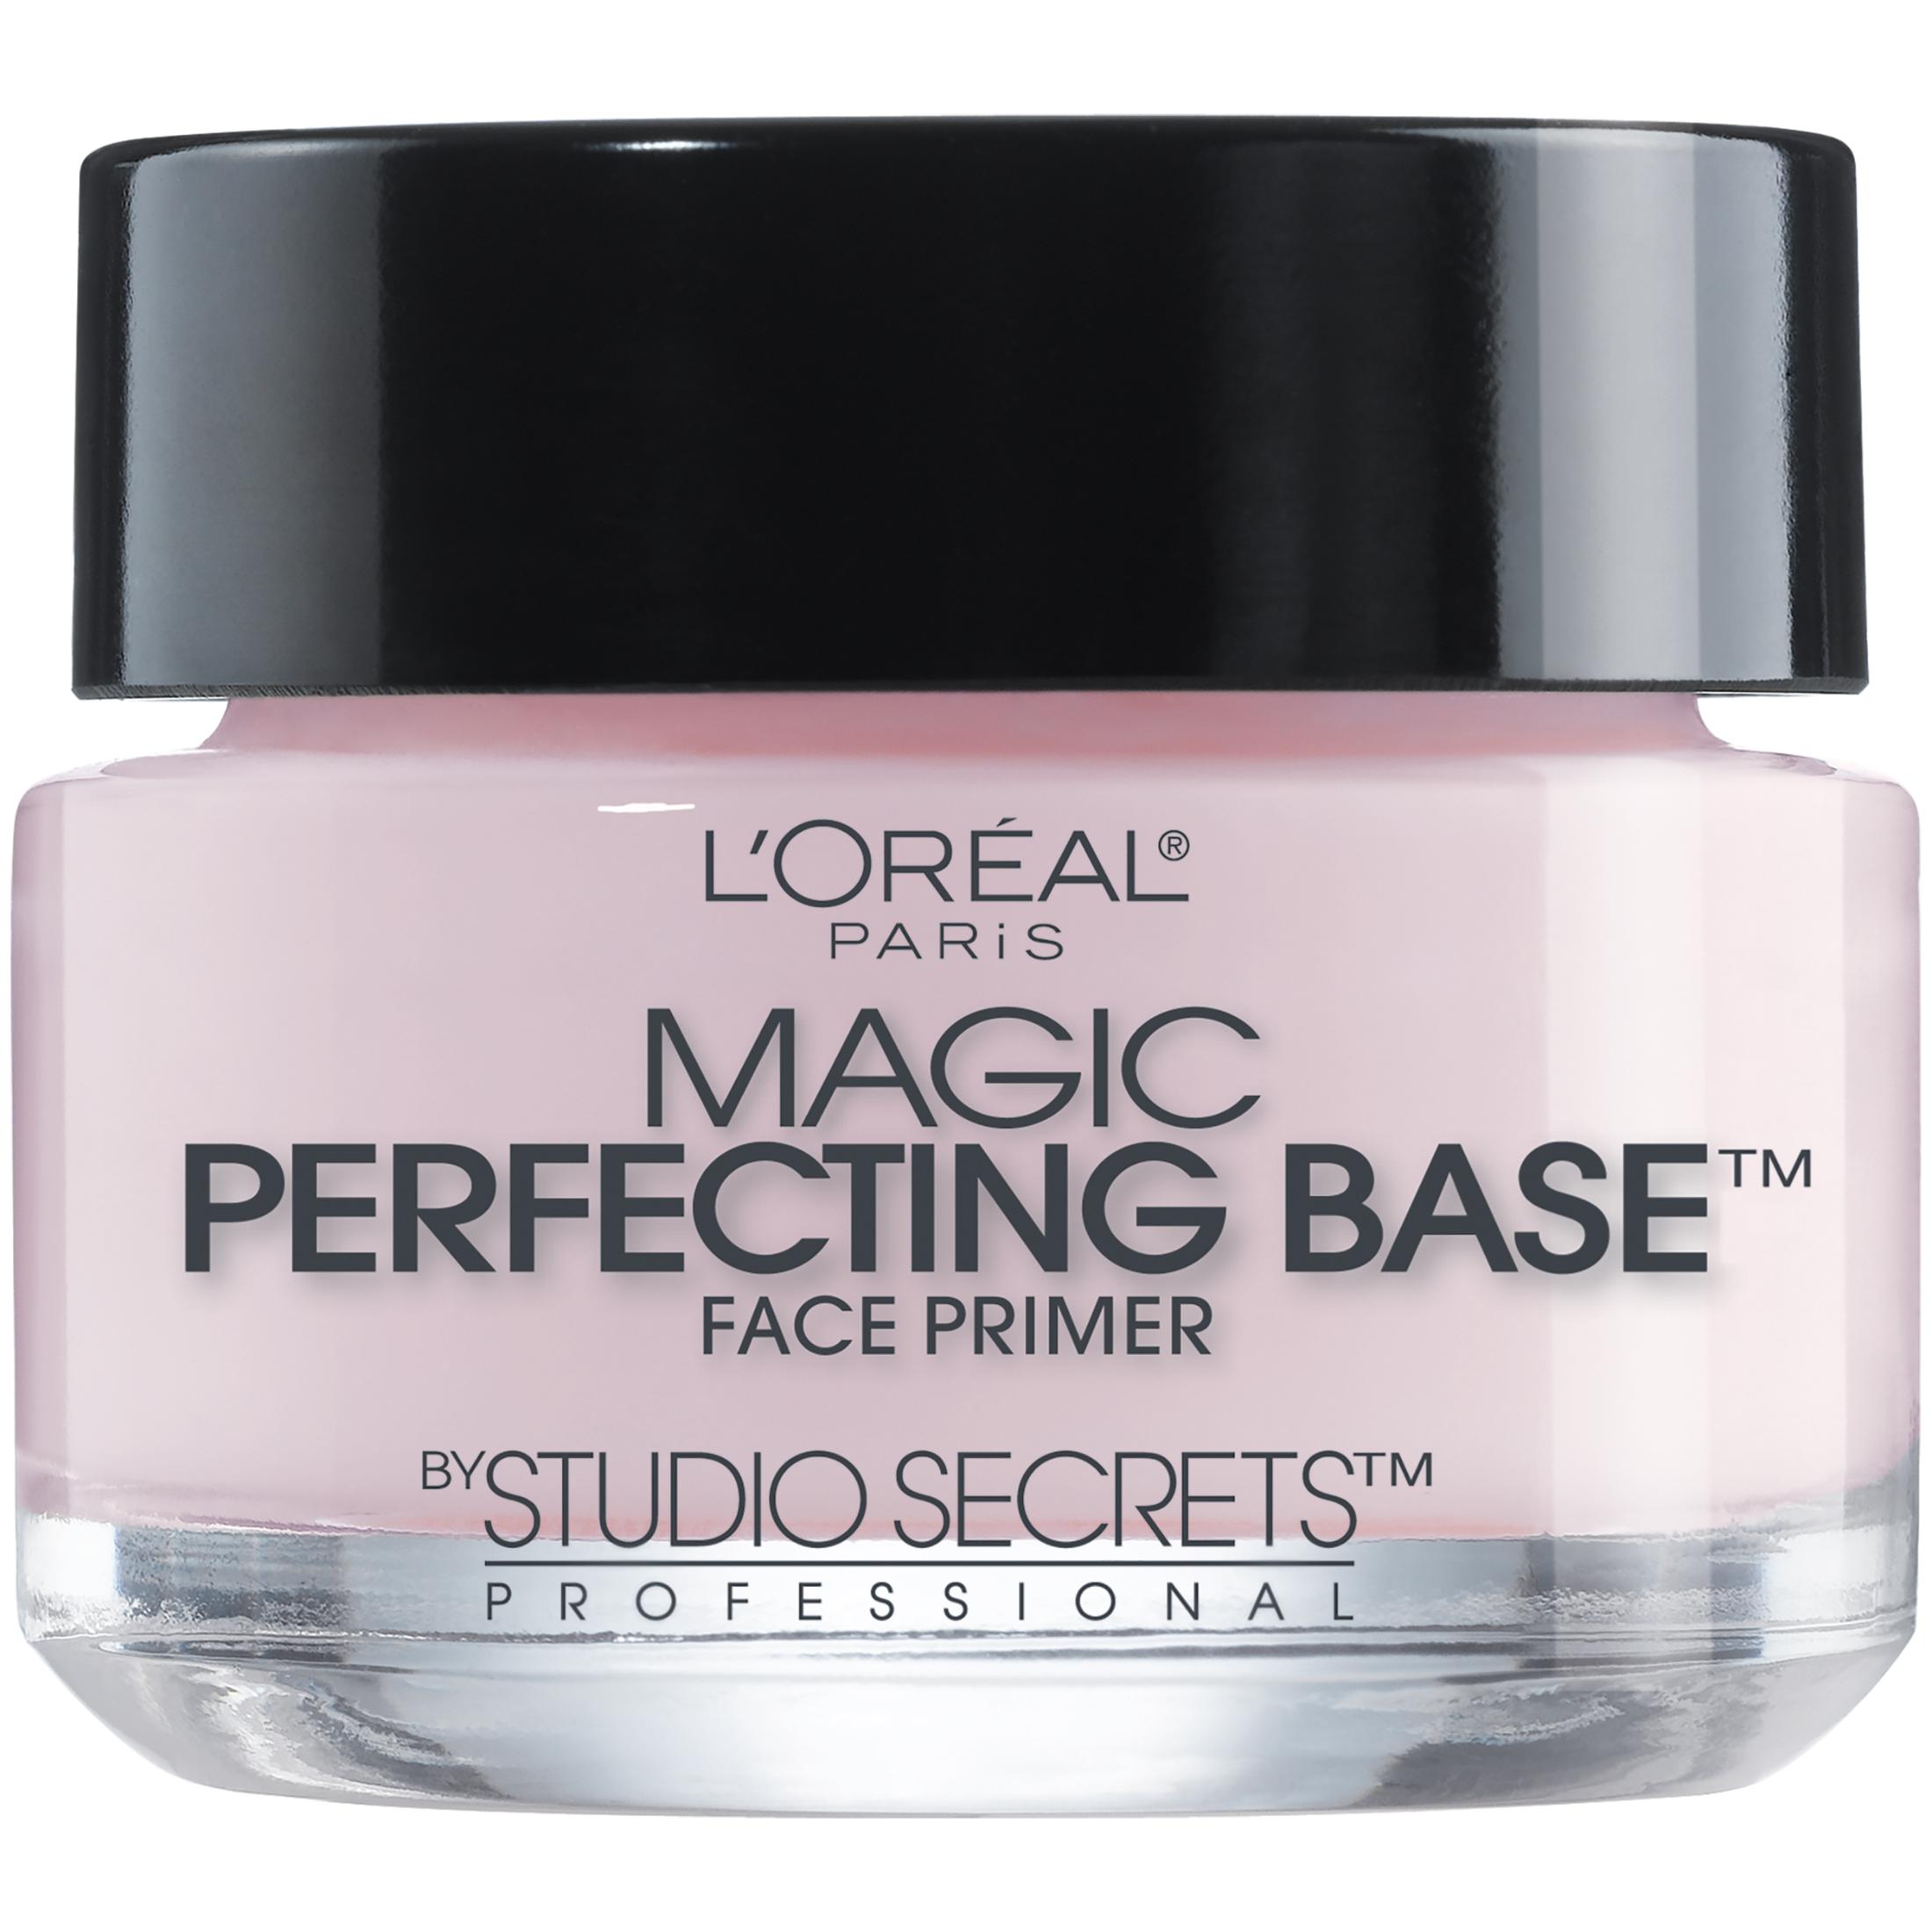 L'Oreal Paris Studio Secrets Professional Magic Perfecting Base Face Primer, 0.5 fl oz - image 1 of 7